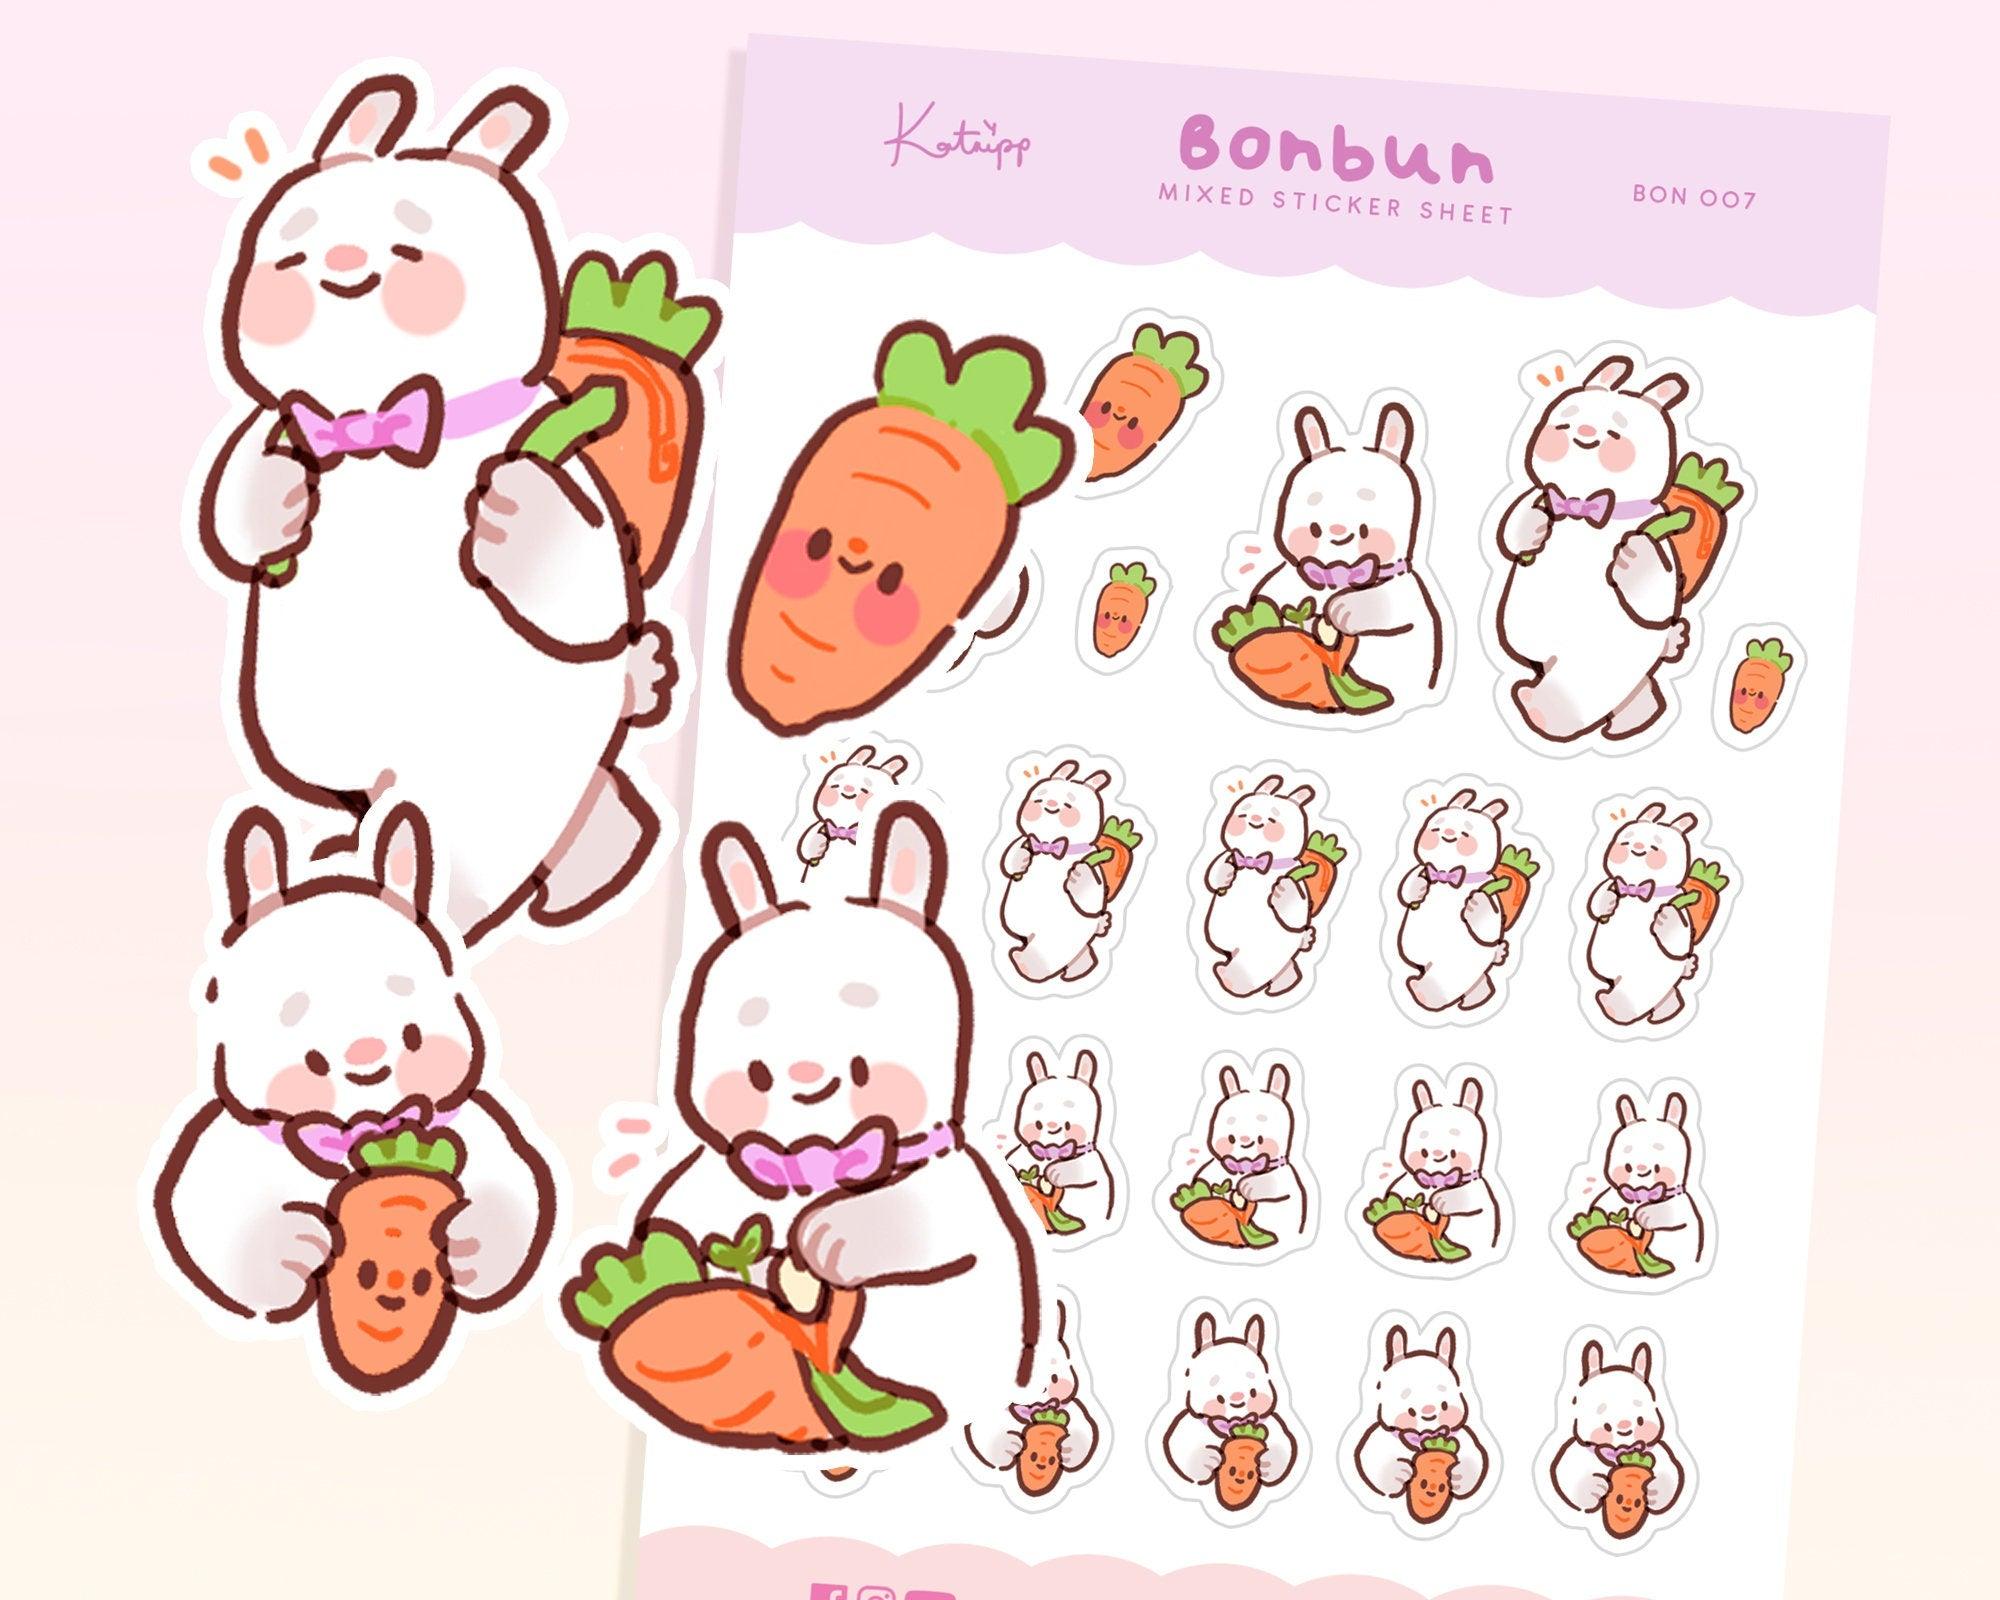 Bonbun School Day Planner Sticker Sheet - Bunny packing carrot bag for school 2